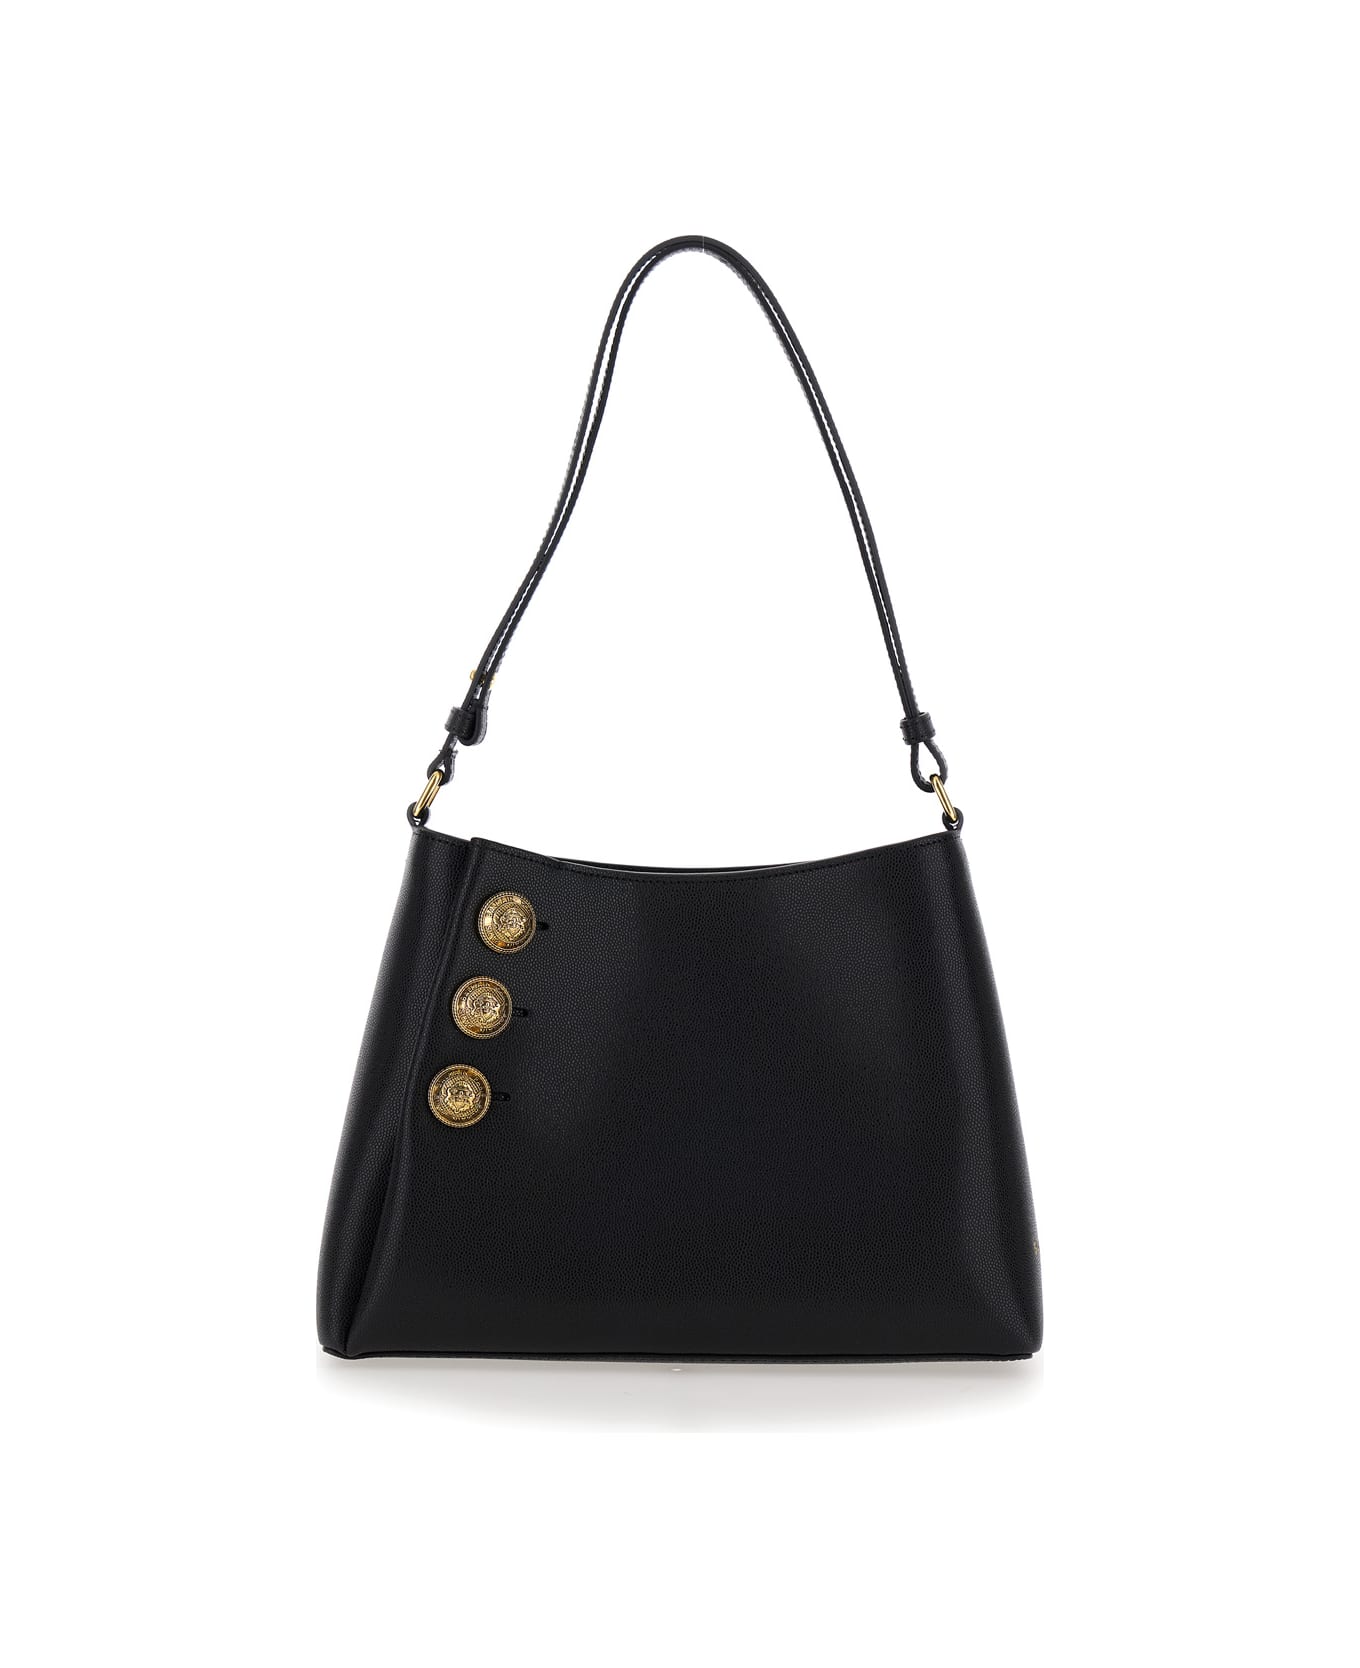 Balmain Black Shoulder Bag With Emblème Motif In Grained Leather Woman - Black